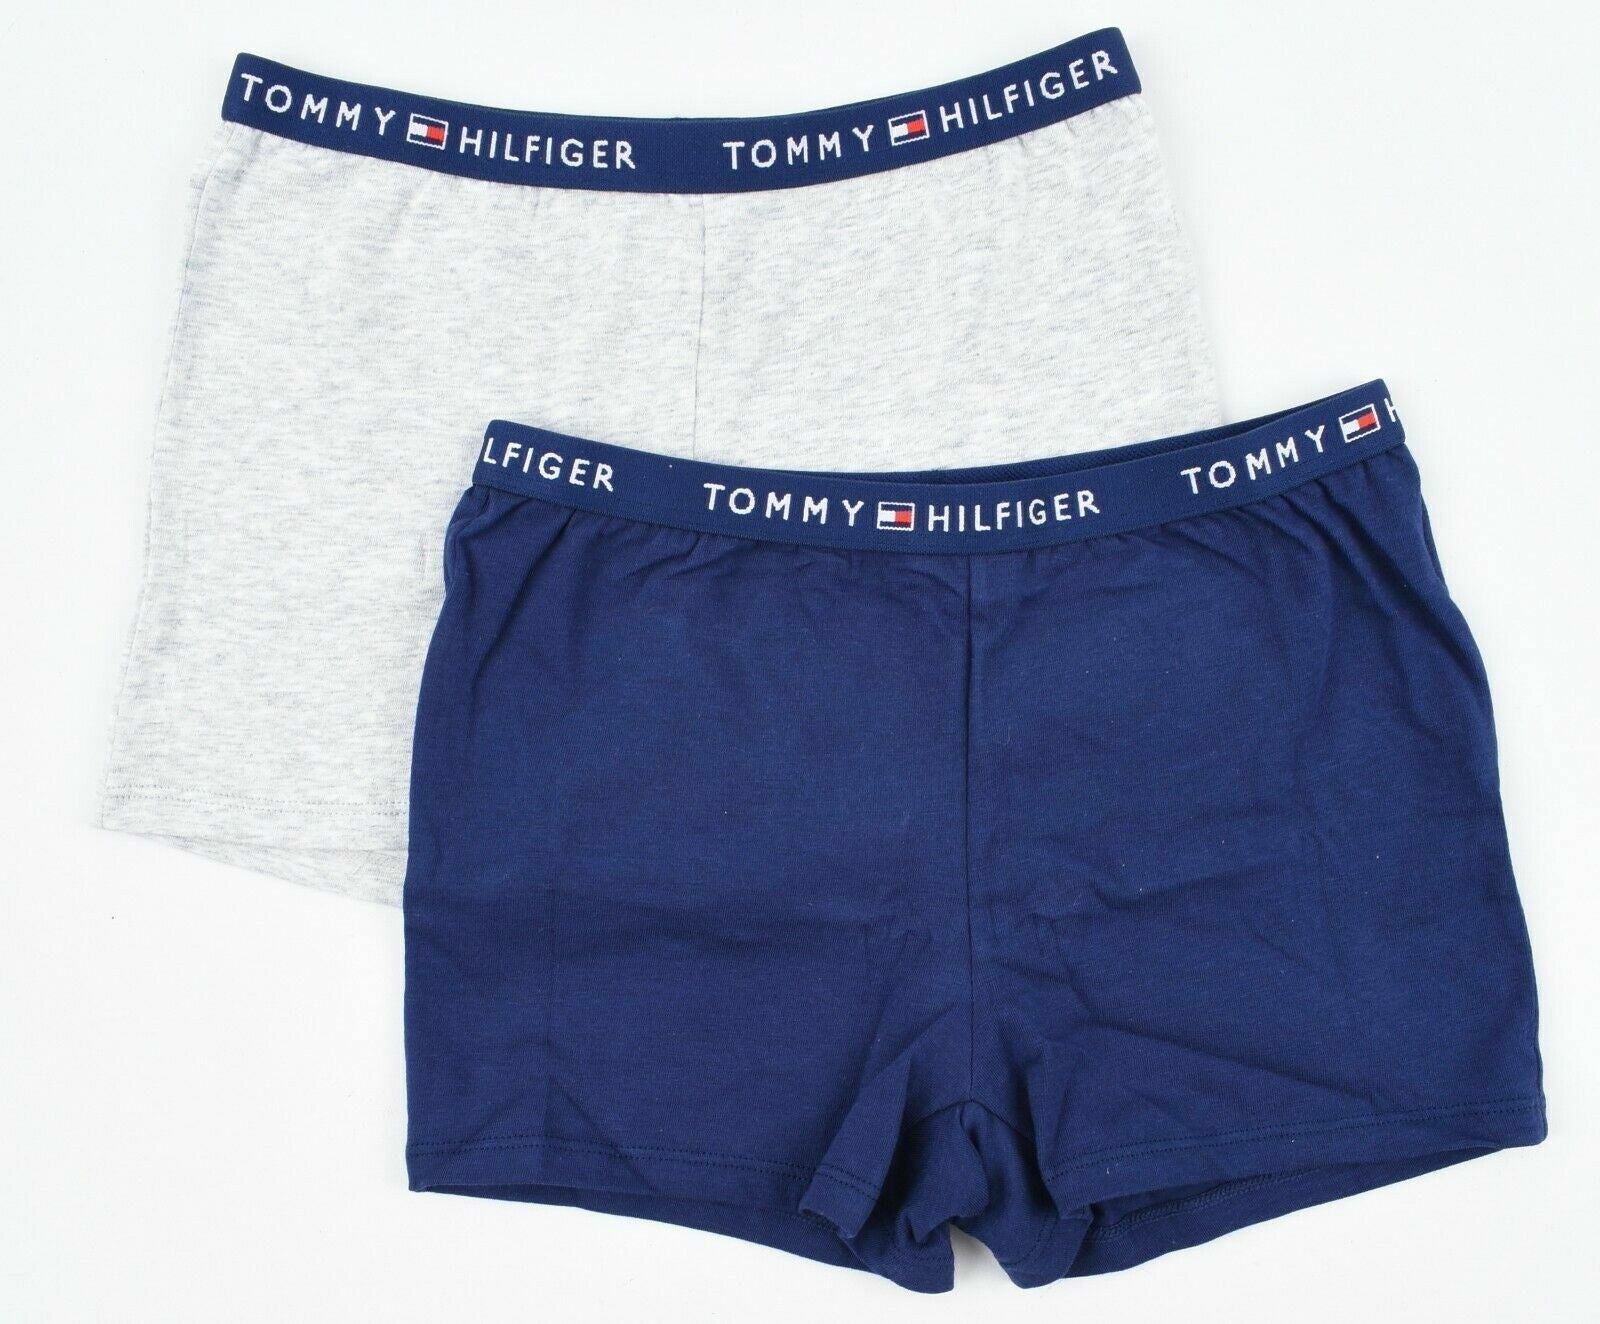 TOMMY HILFIGER Girls Underwear 2pk Boy Shorts Briefs Knickers 6 y to 7 Years